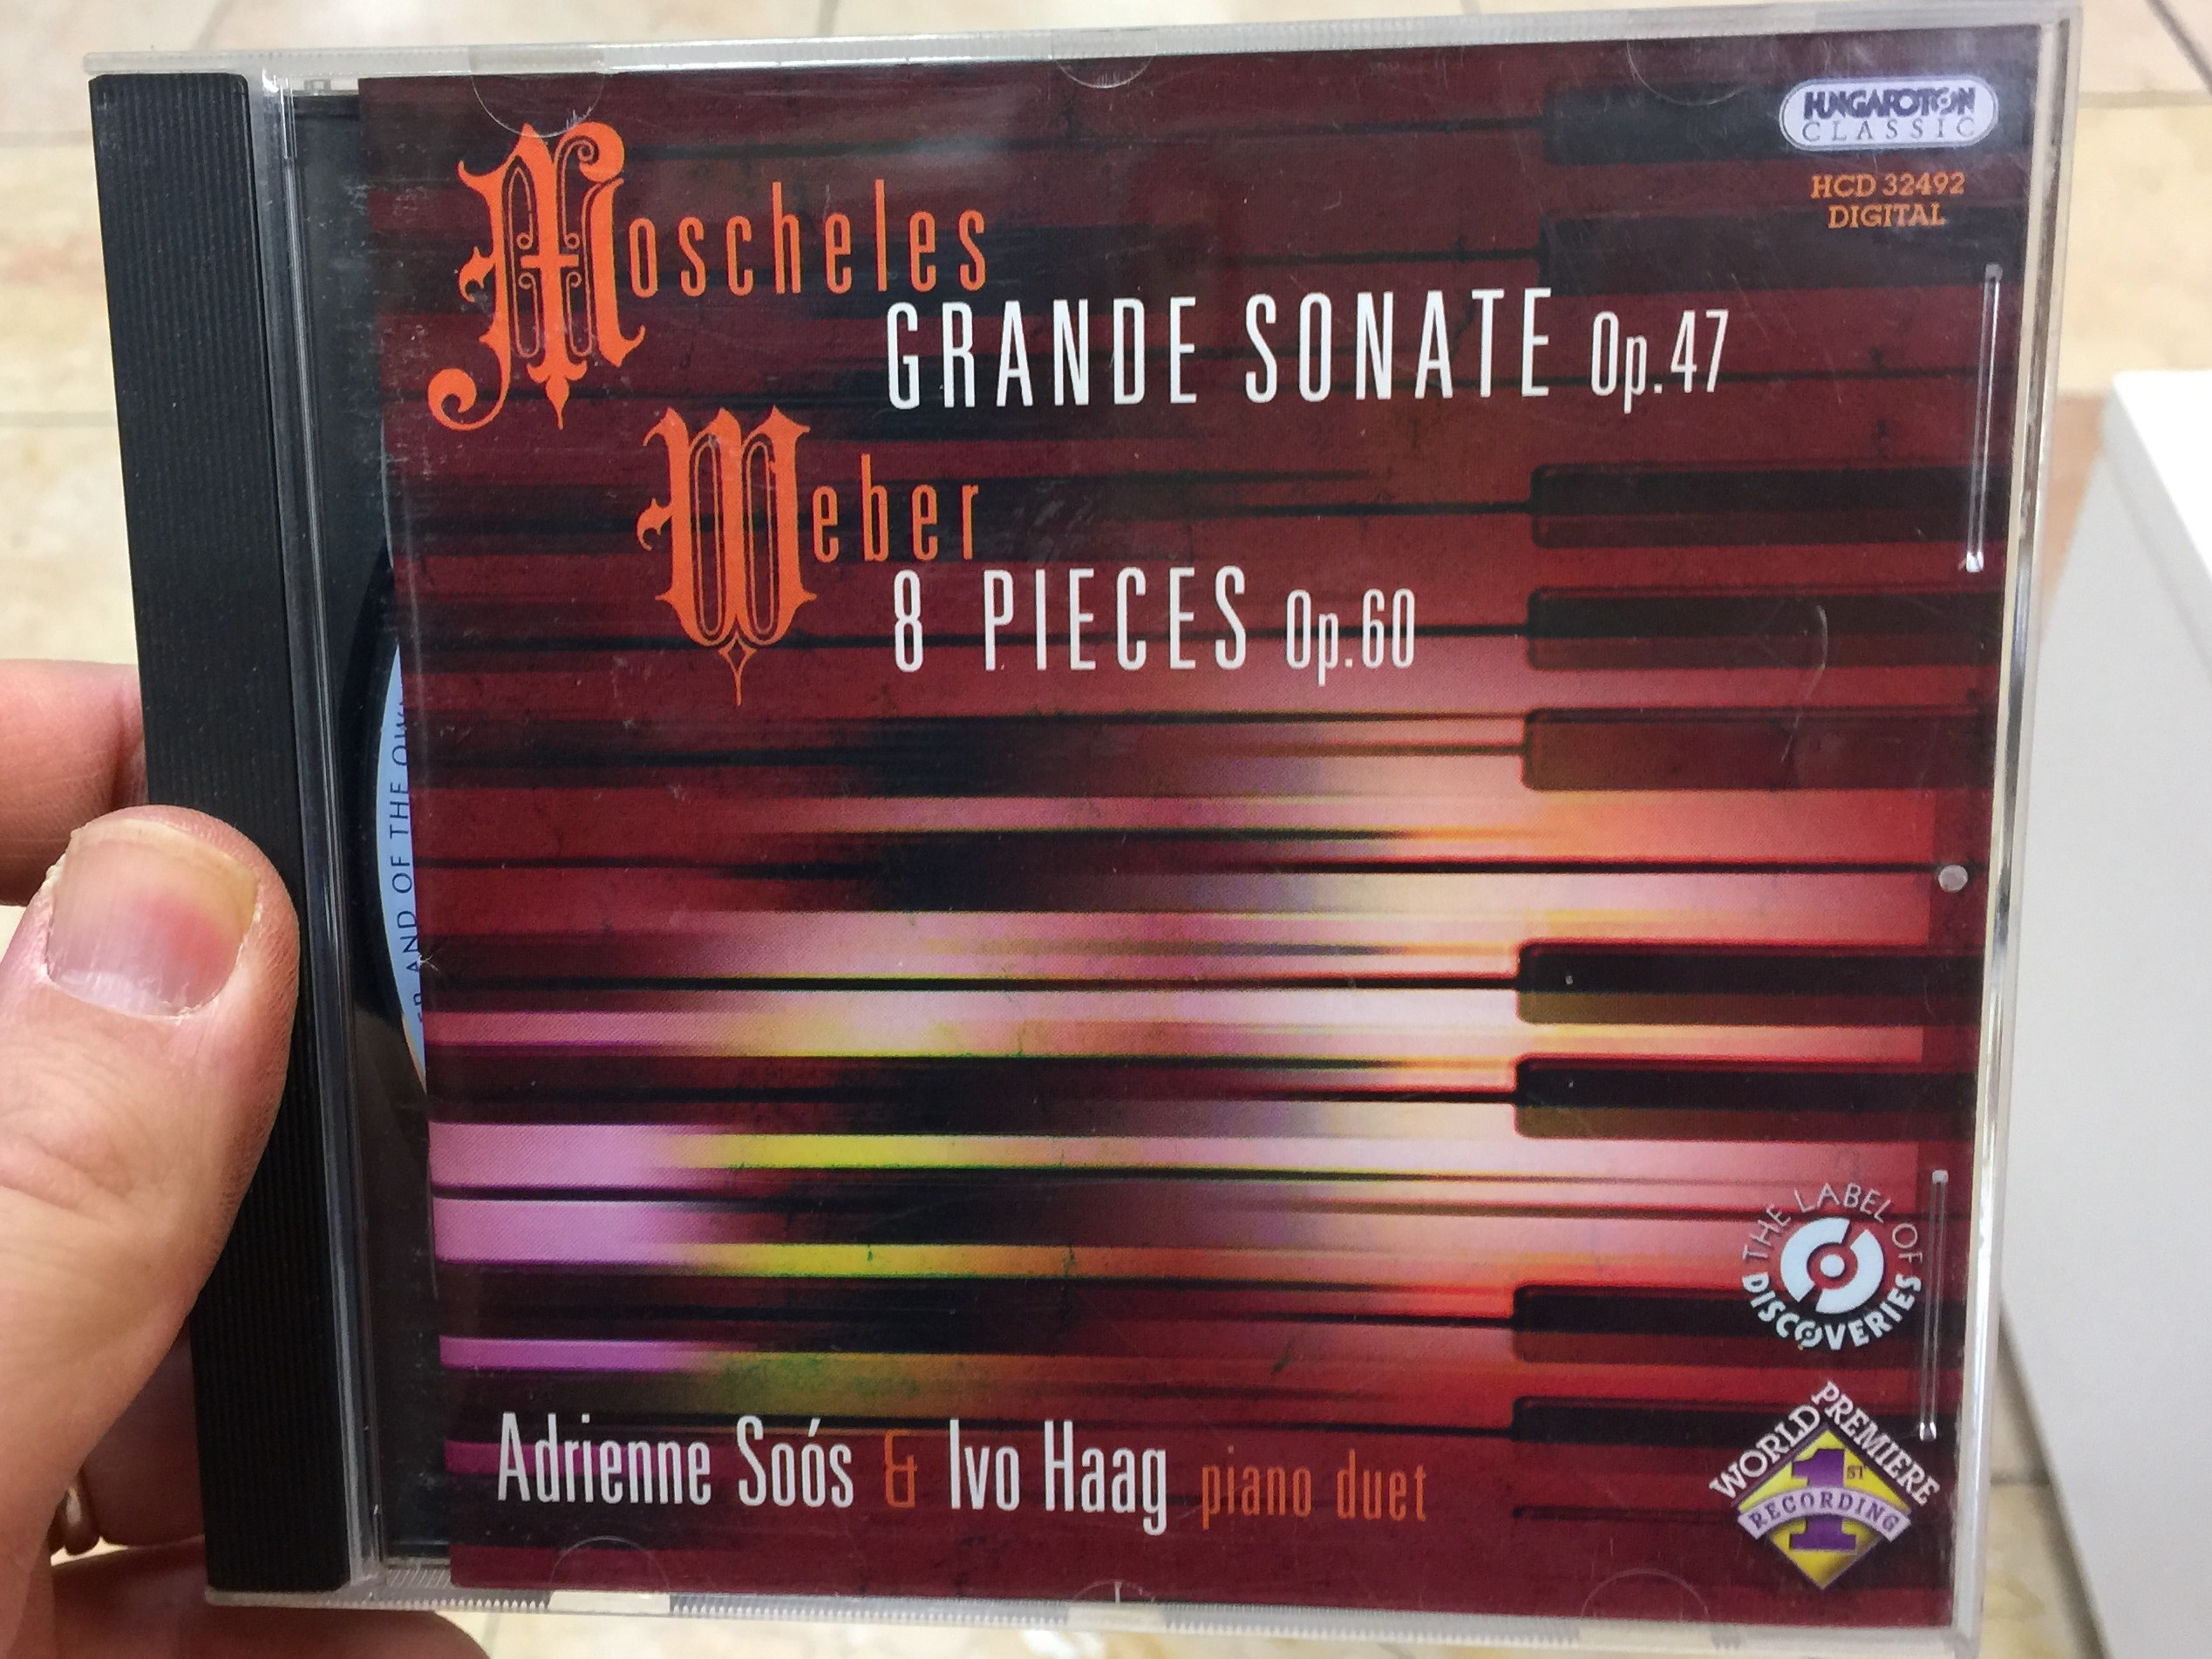 moscheles-grande-sonate-op.-47-weber-8-pieces-op.-60-adrienne-soos-ivo-haag-piano-duet-hungaroton-classic-audio-cd-2008-stereo-hcd-32492-1-.jpg